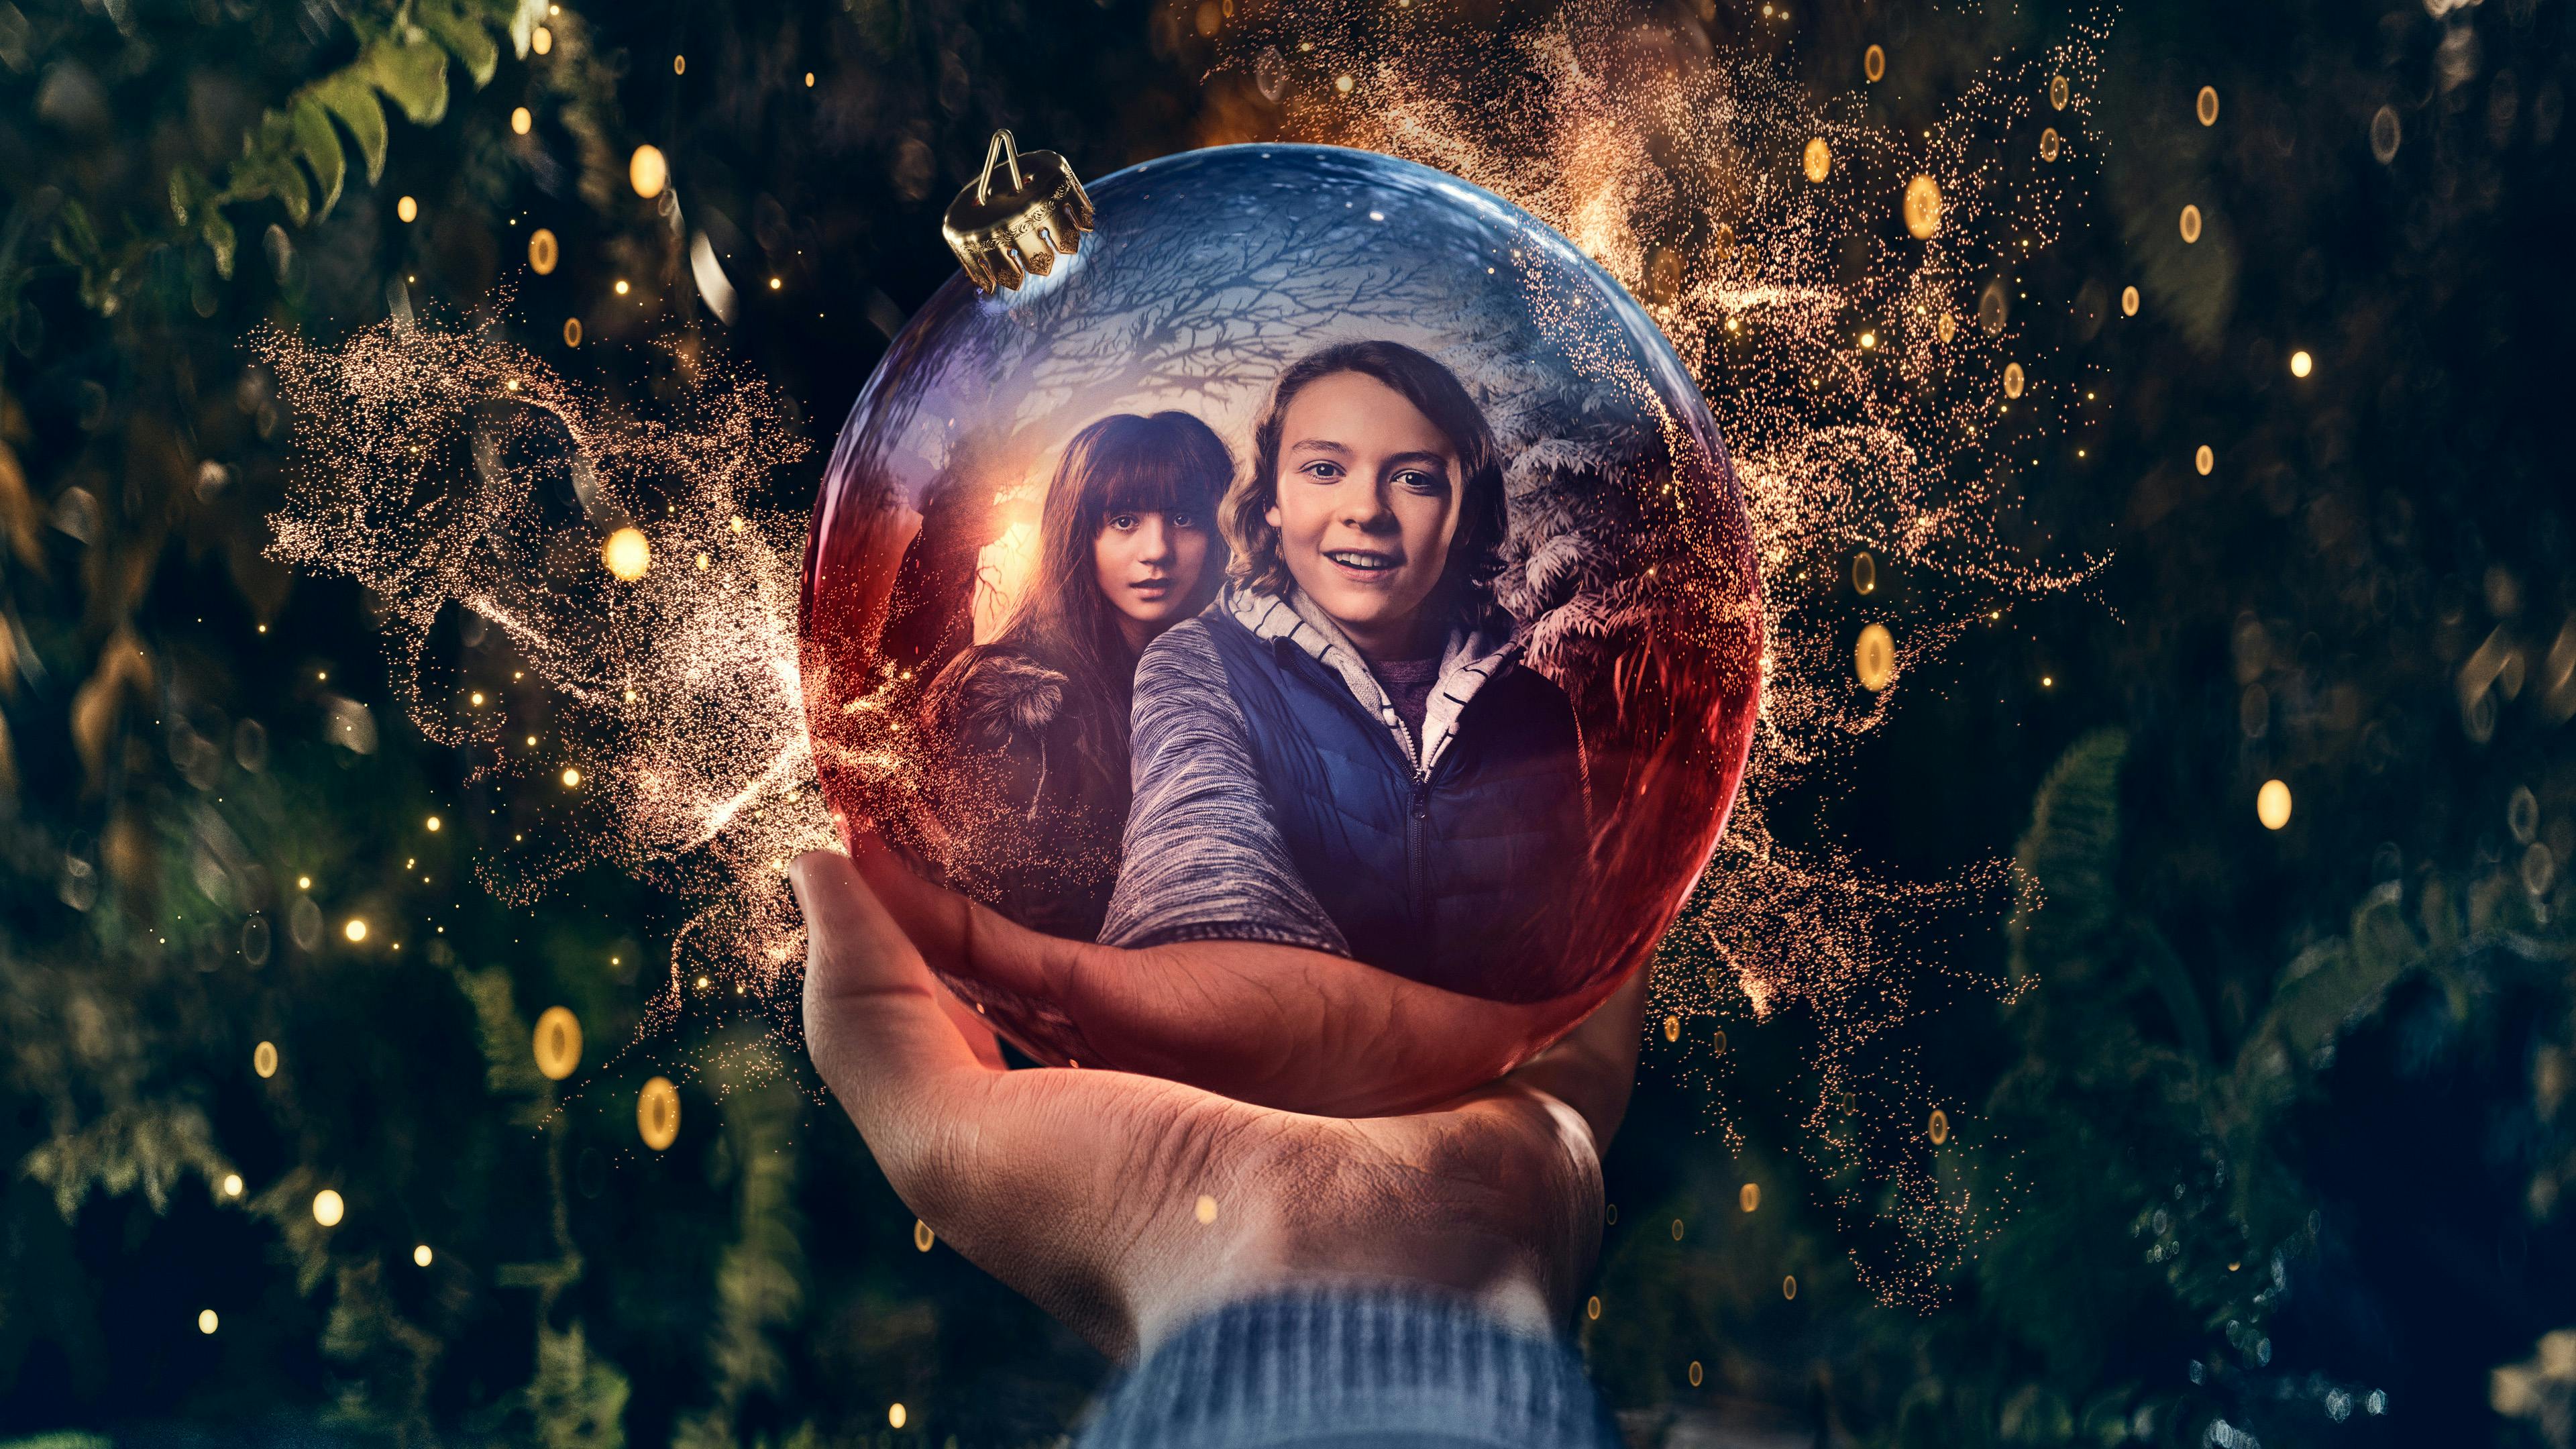 'Valdes jul' er årets familiejulekalender på TV 2